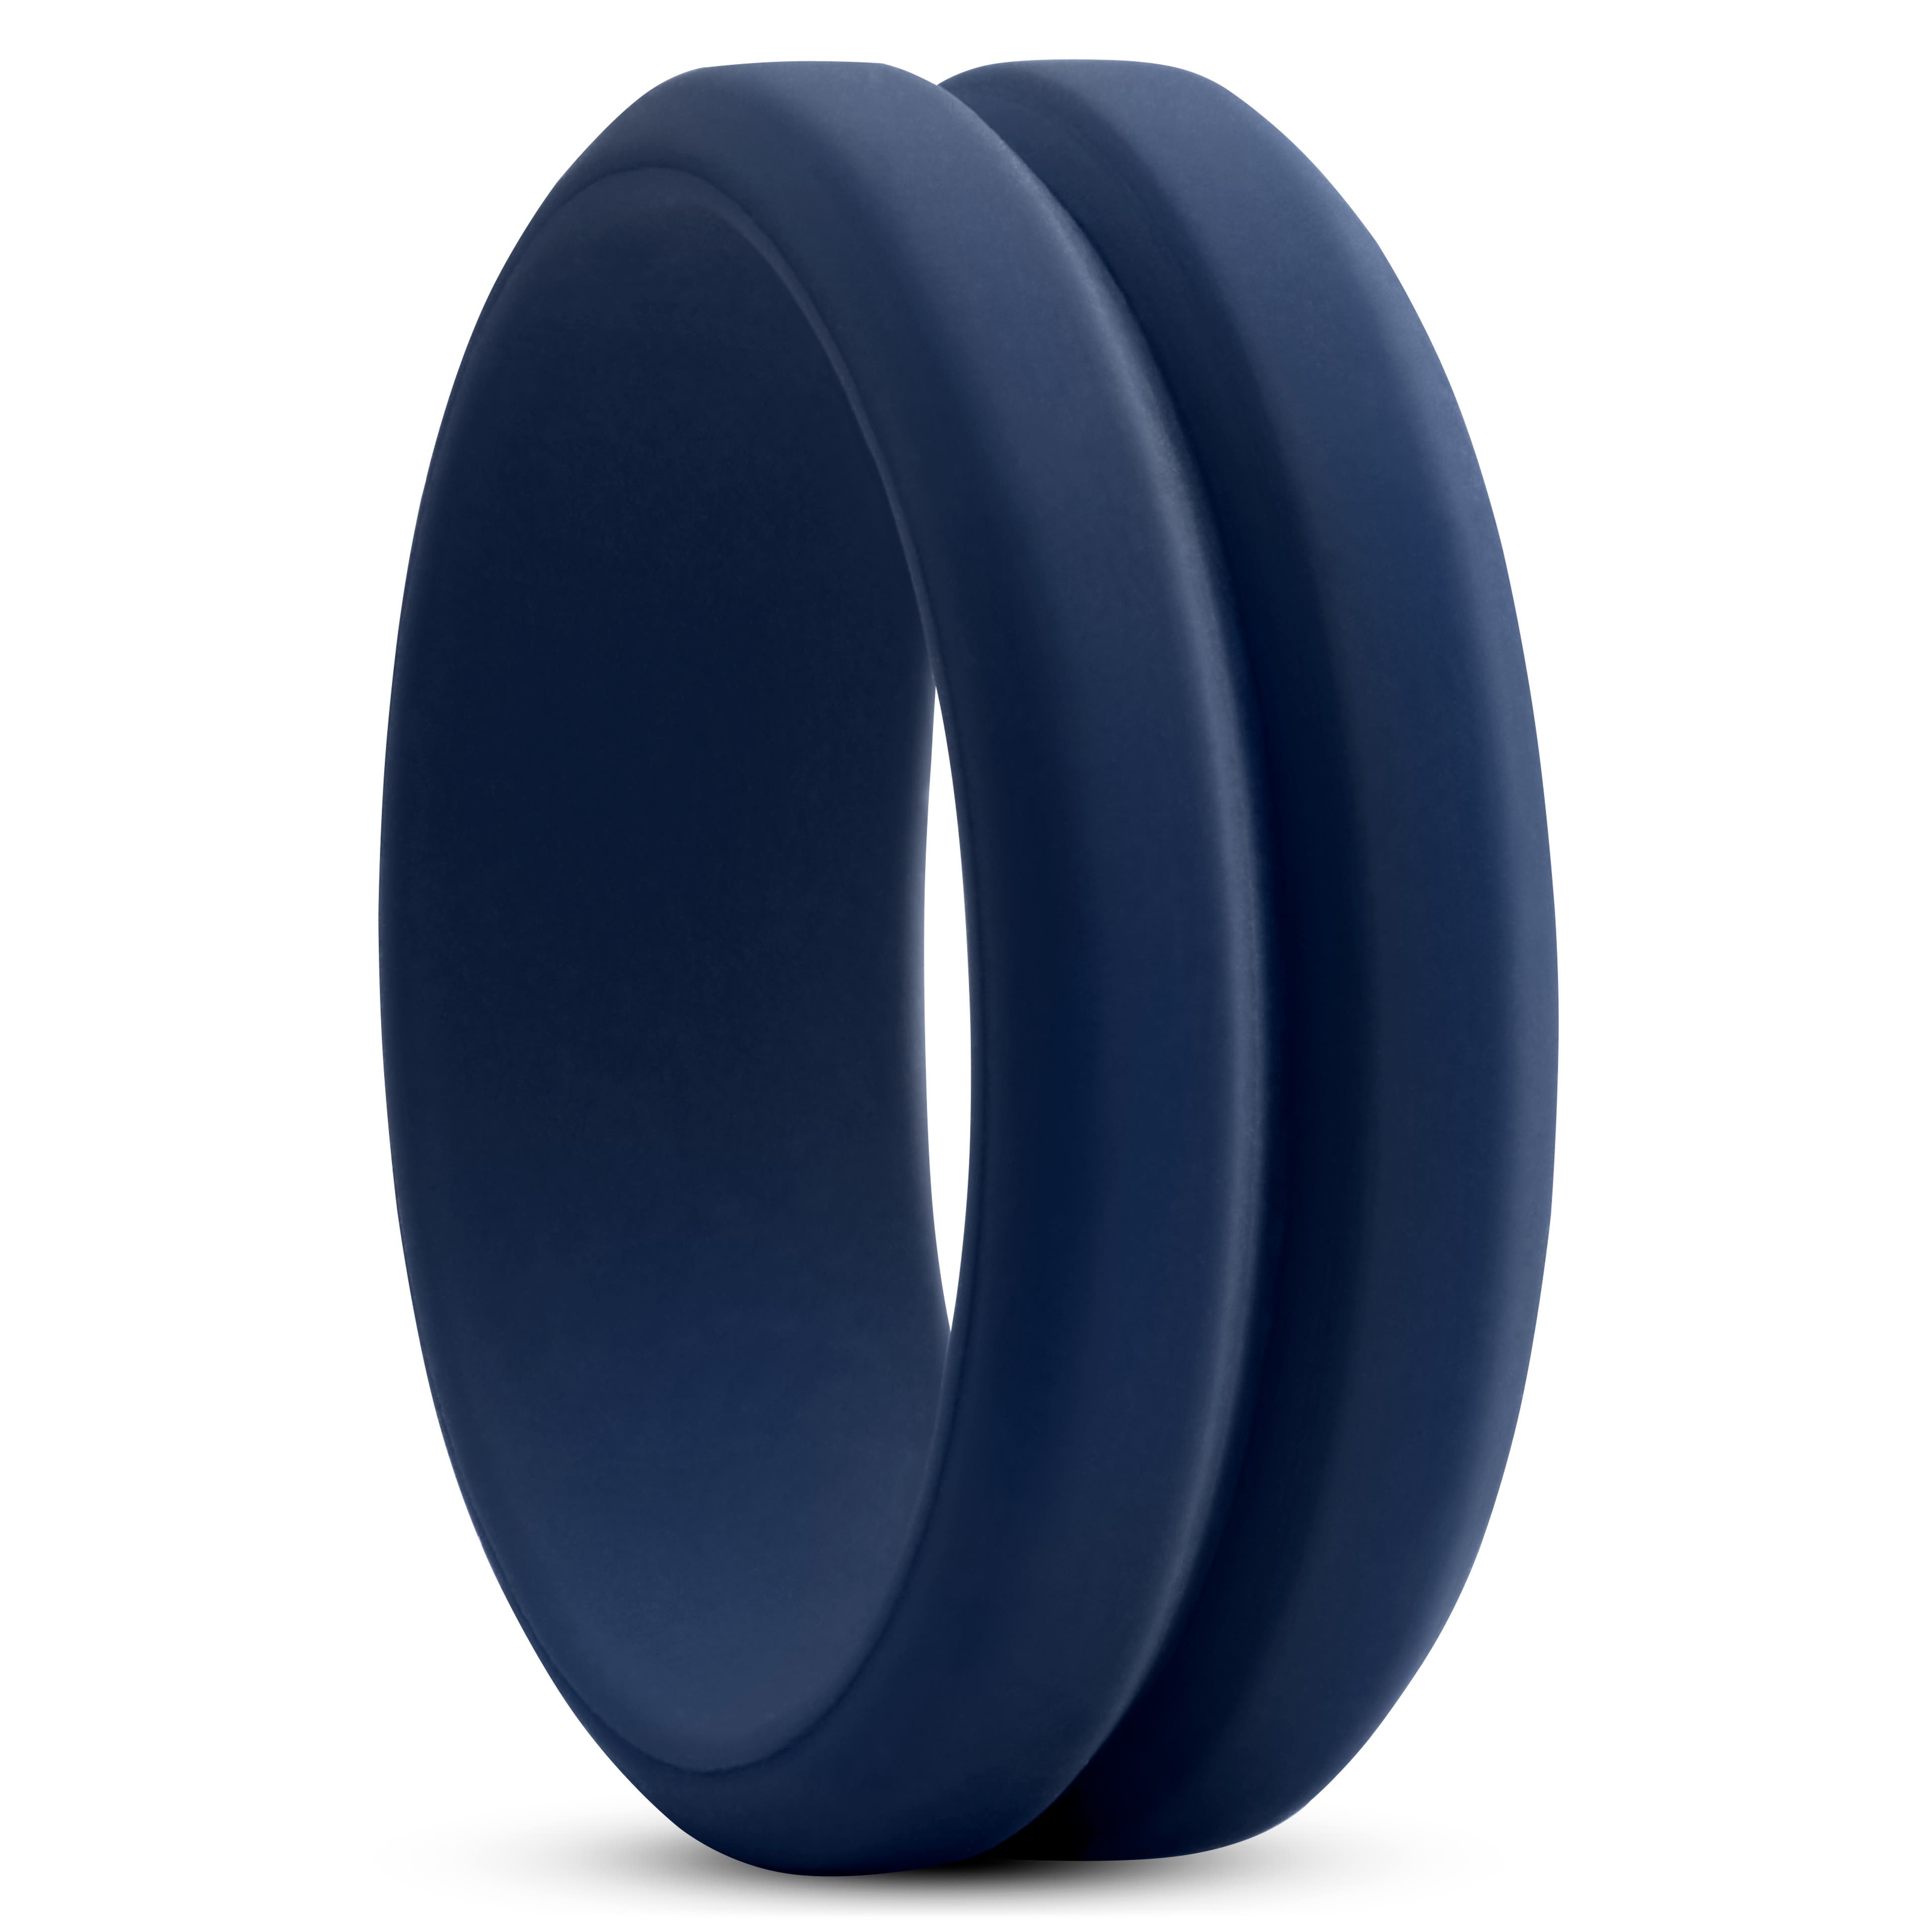 Marineblauwe Siliconen Ring